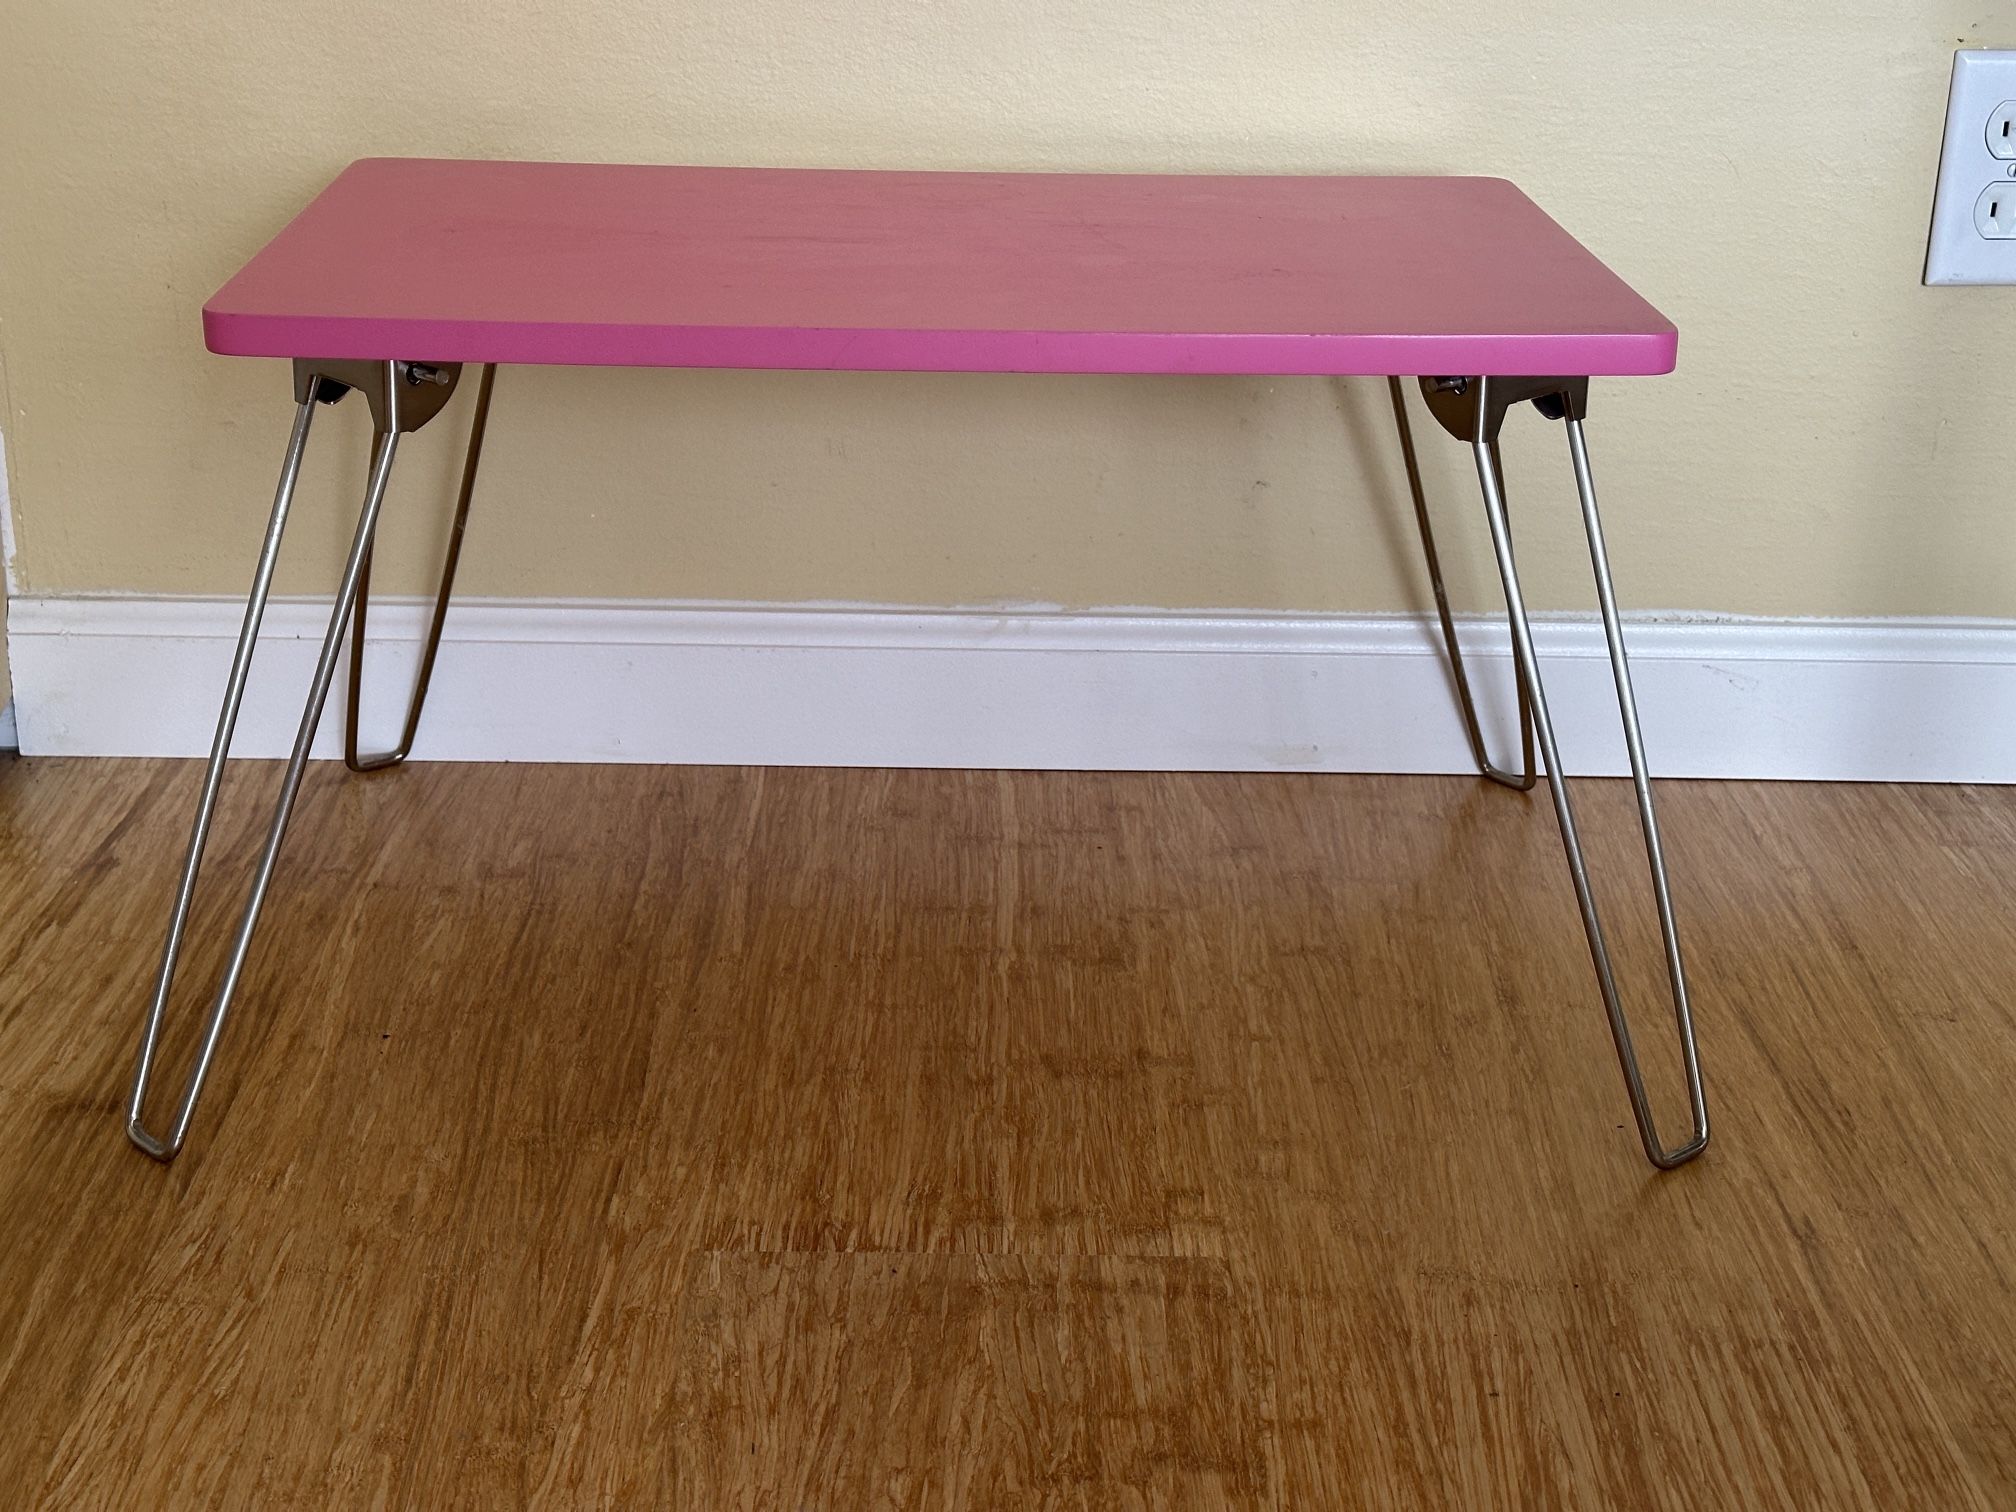 SGSKEIEY Folding Table Leg 4Pcs Height 